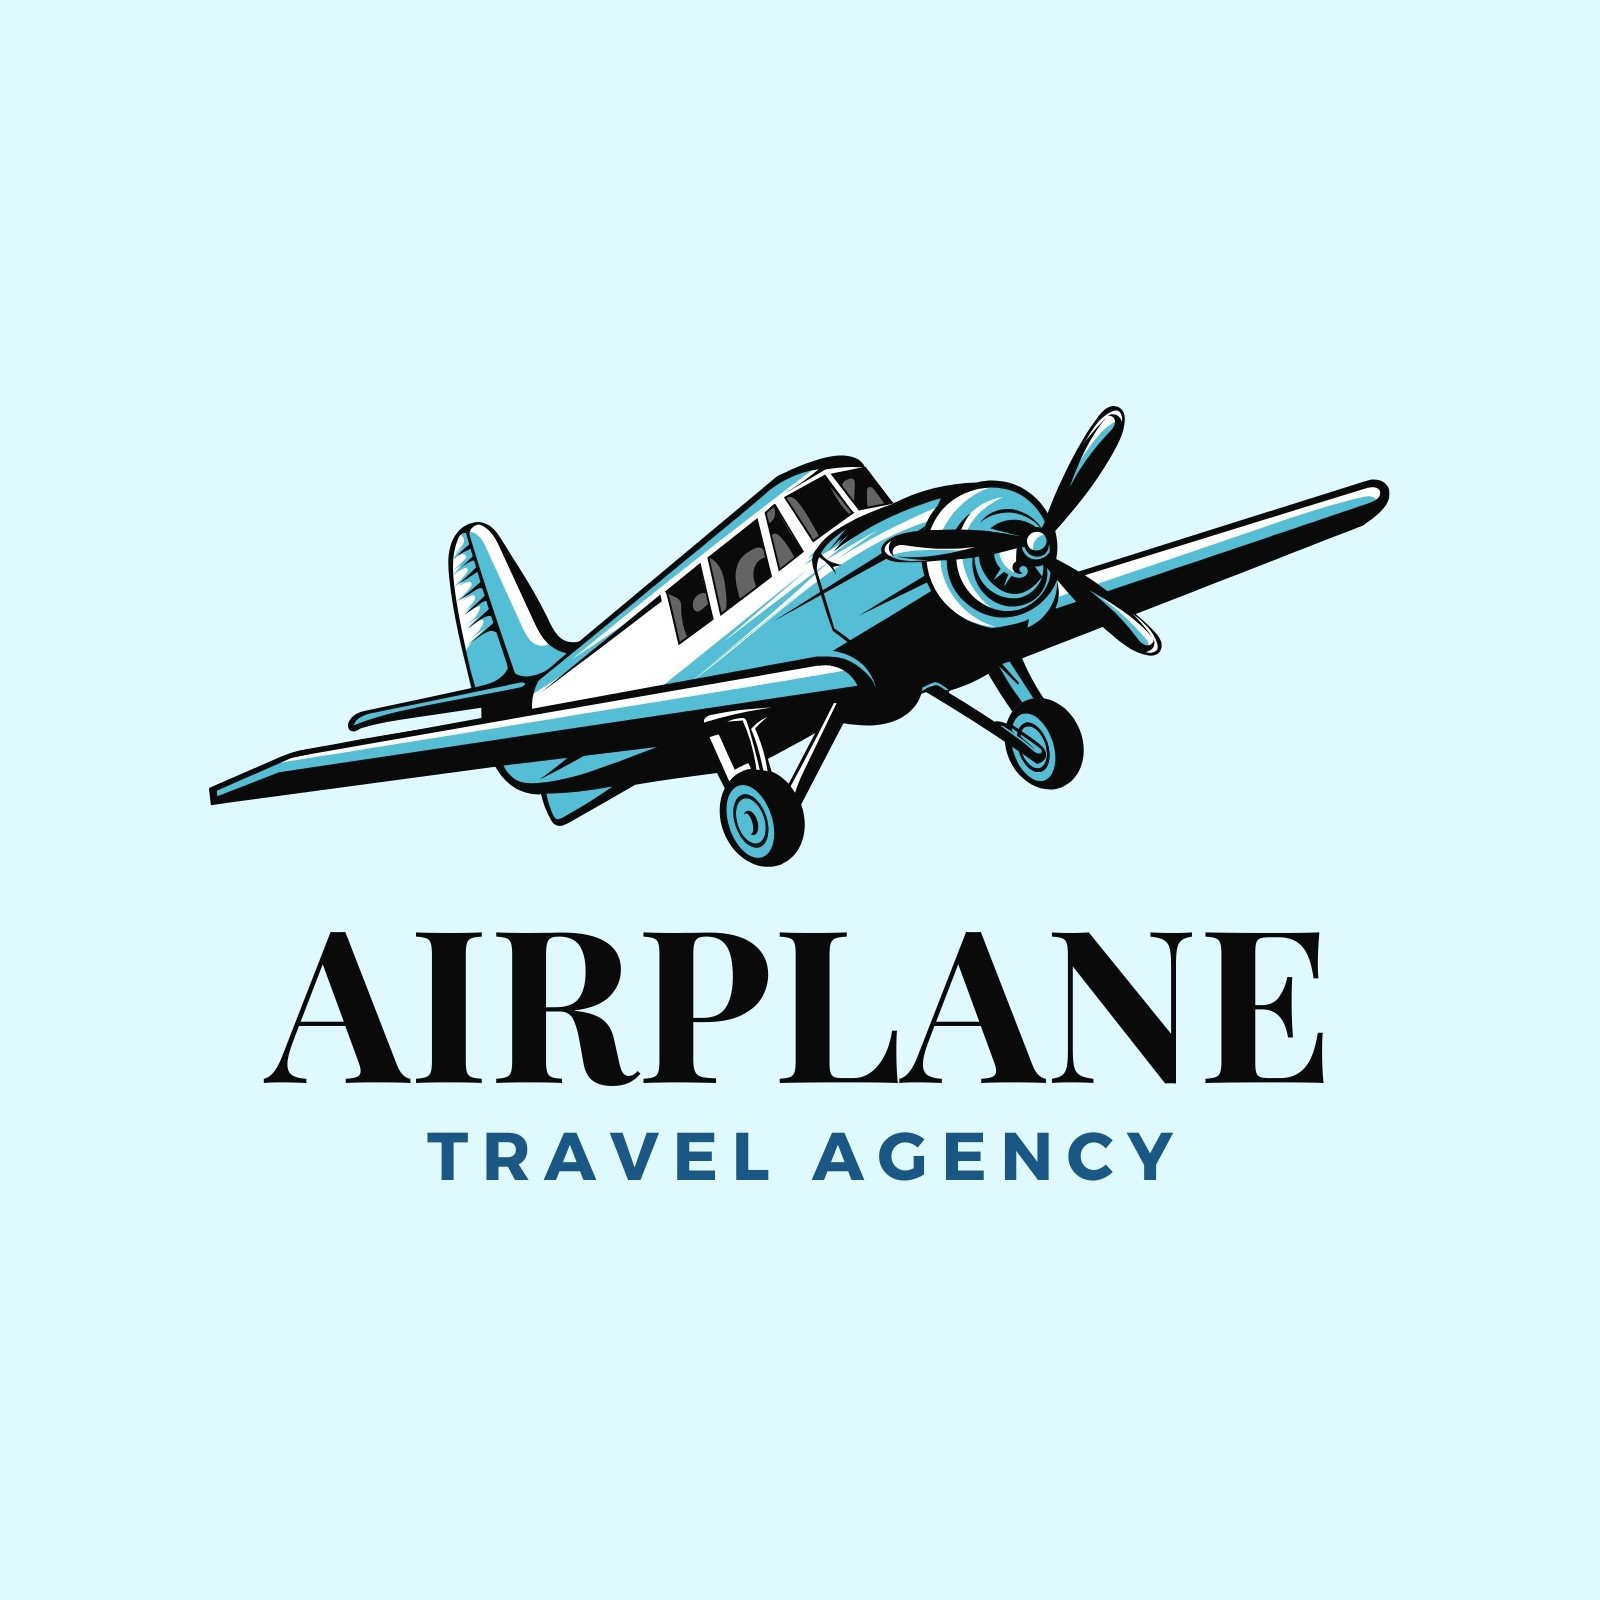 Plane Logos - 289+ Best Plane Logo Ideas. Free Plane Logo Maker. | 99designs